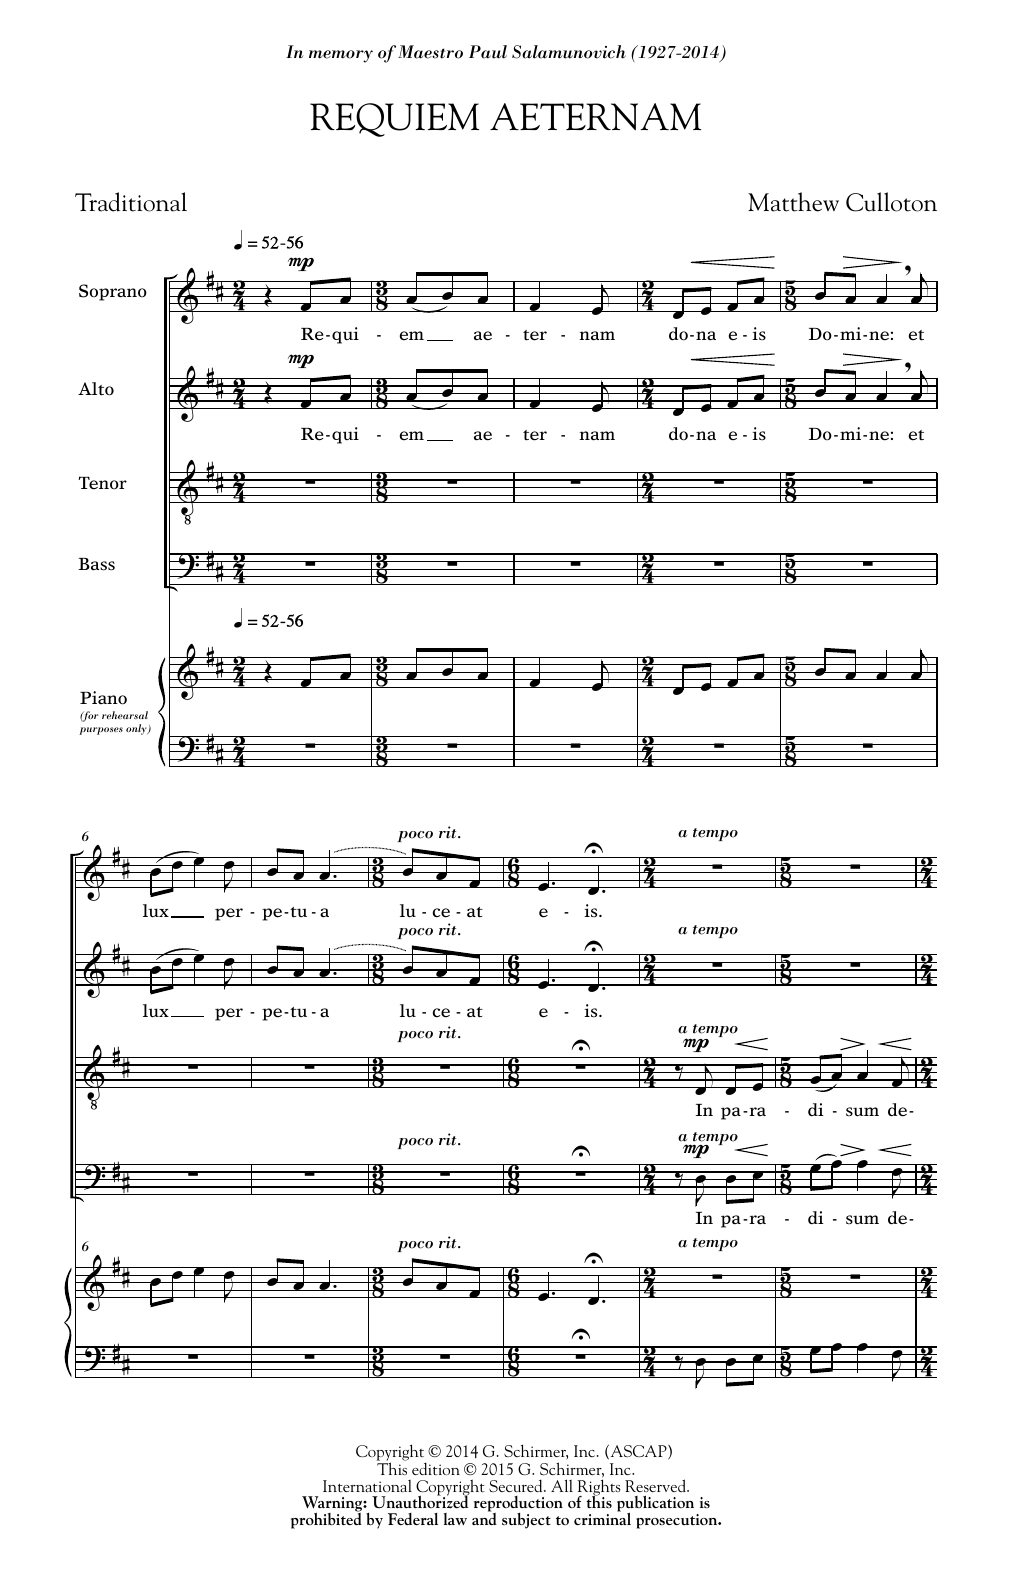 Matthew Colluton Requiem Aeternam sheet music notes and chords arranged for SATB Choir